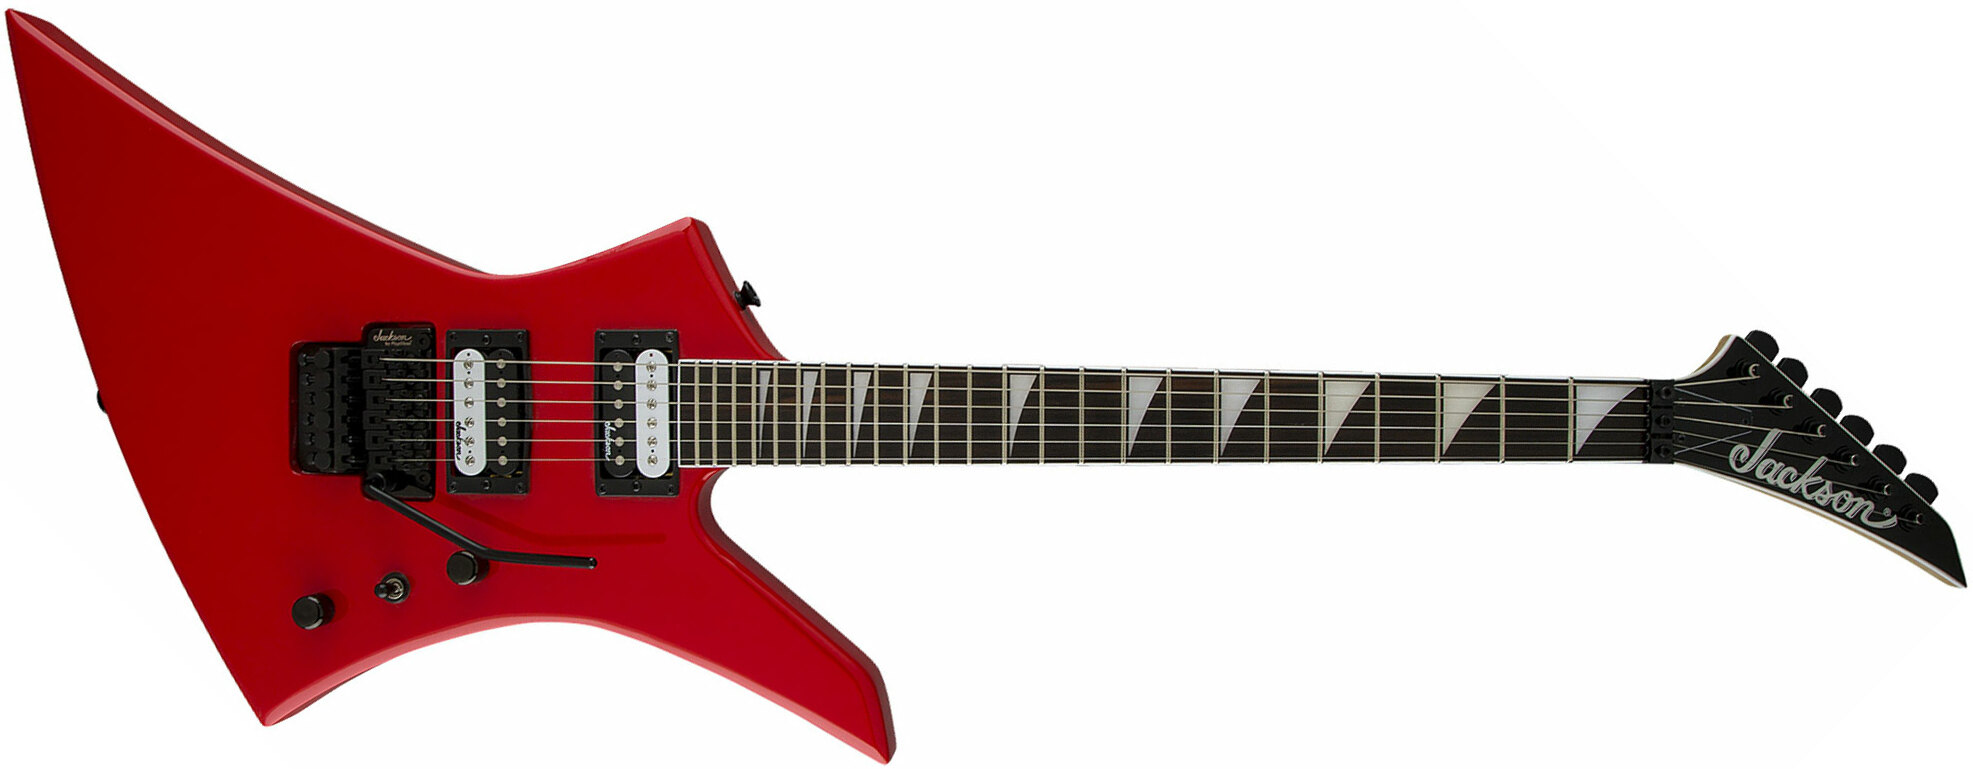 Jackson Kelly Js32 2h Fr Ama - Ferrari Red - E-Gitarre aus Metall - Main picture